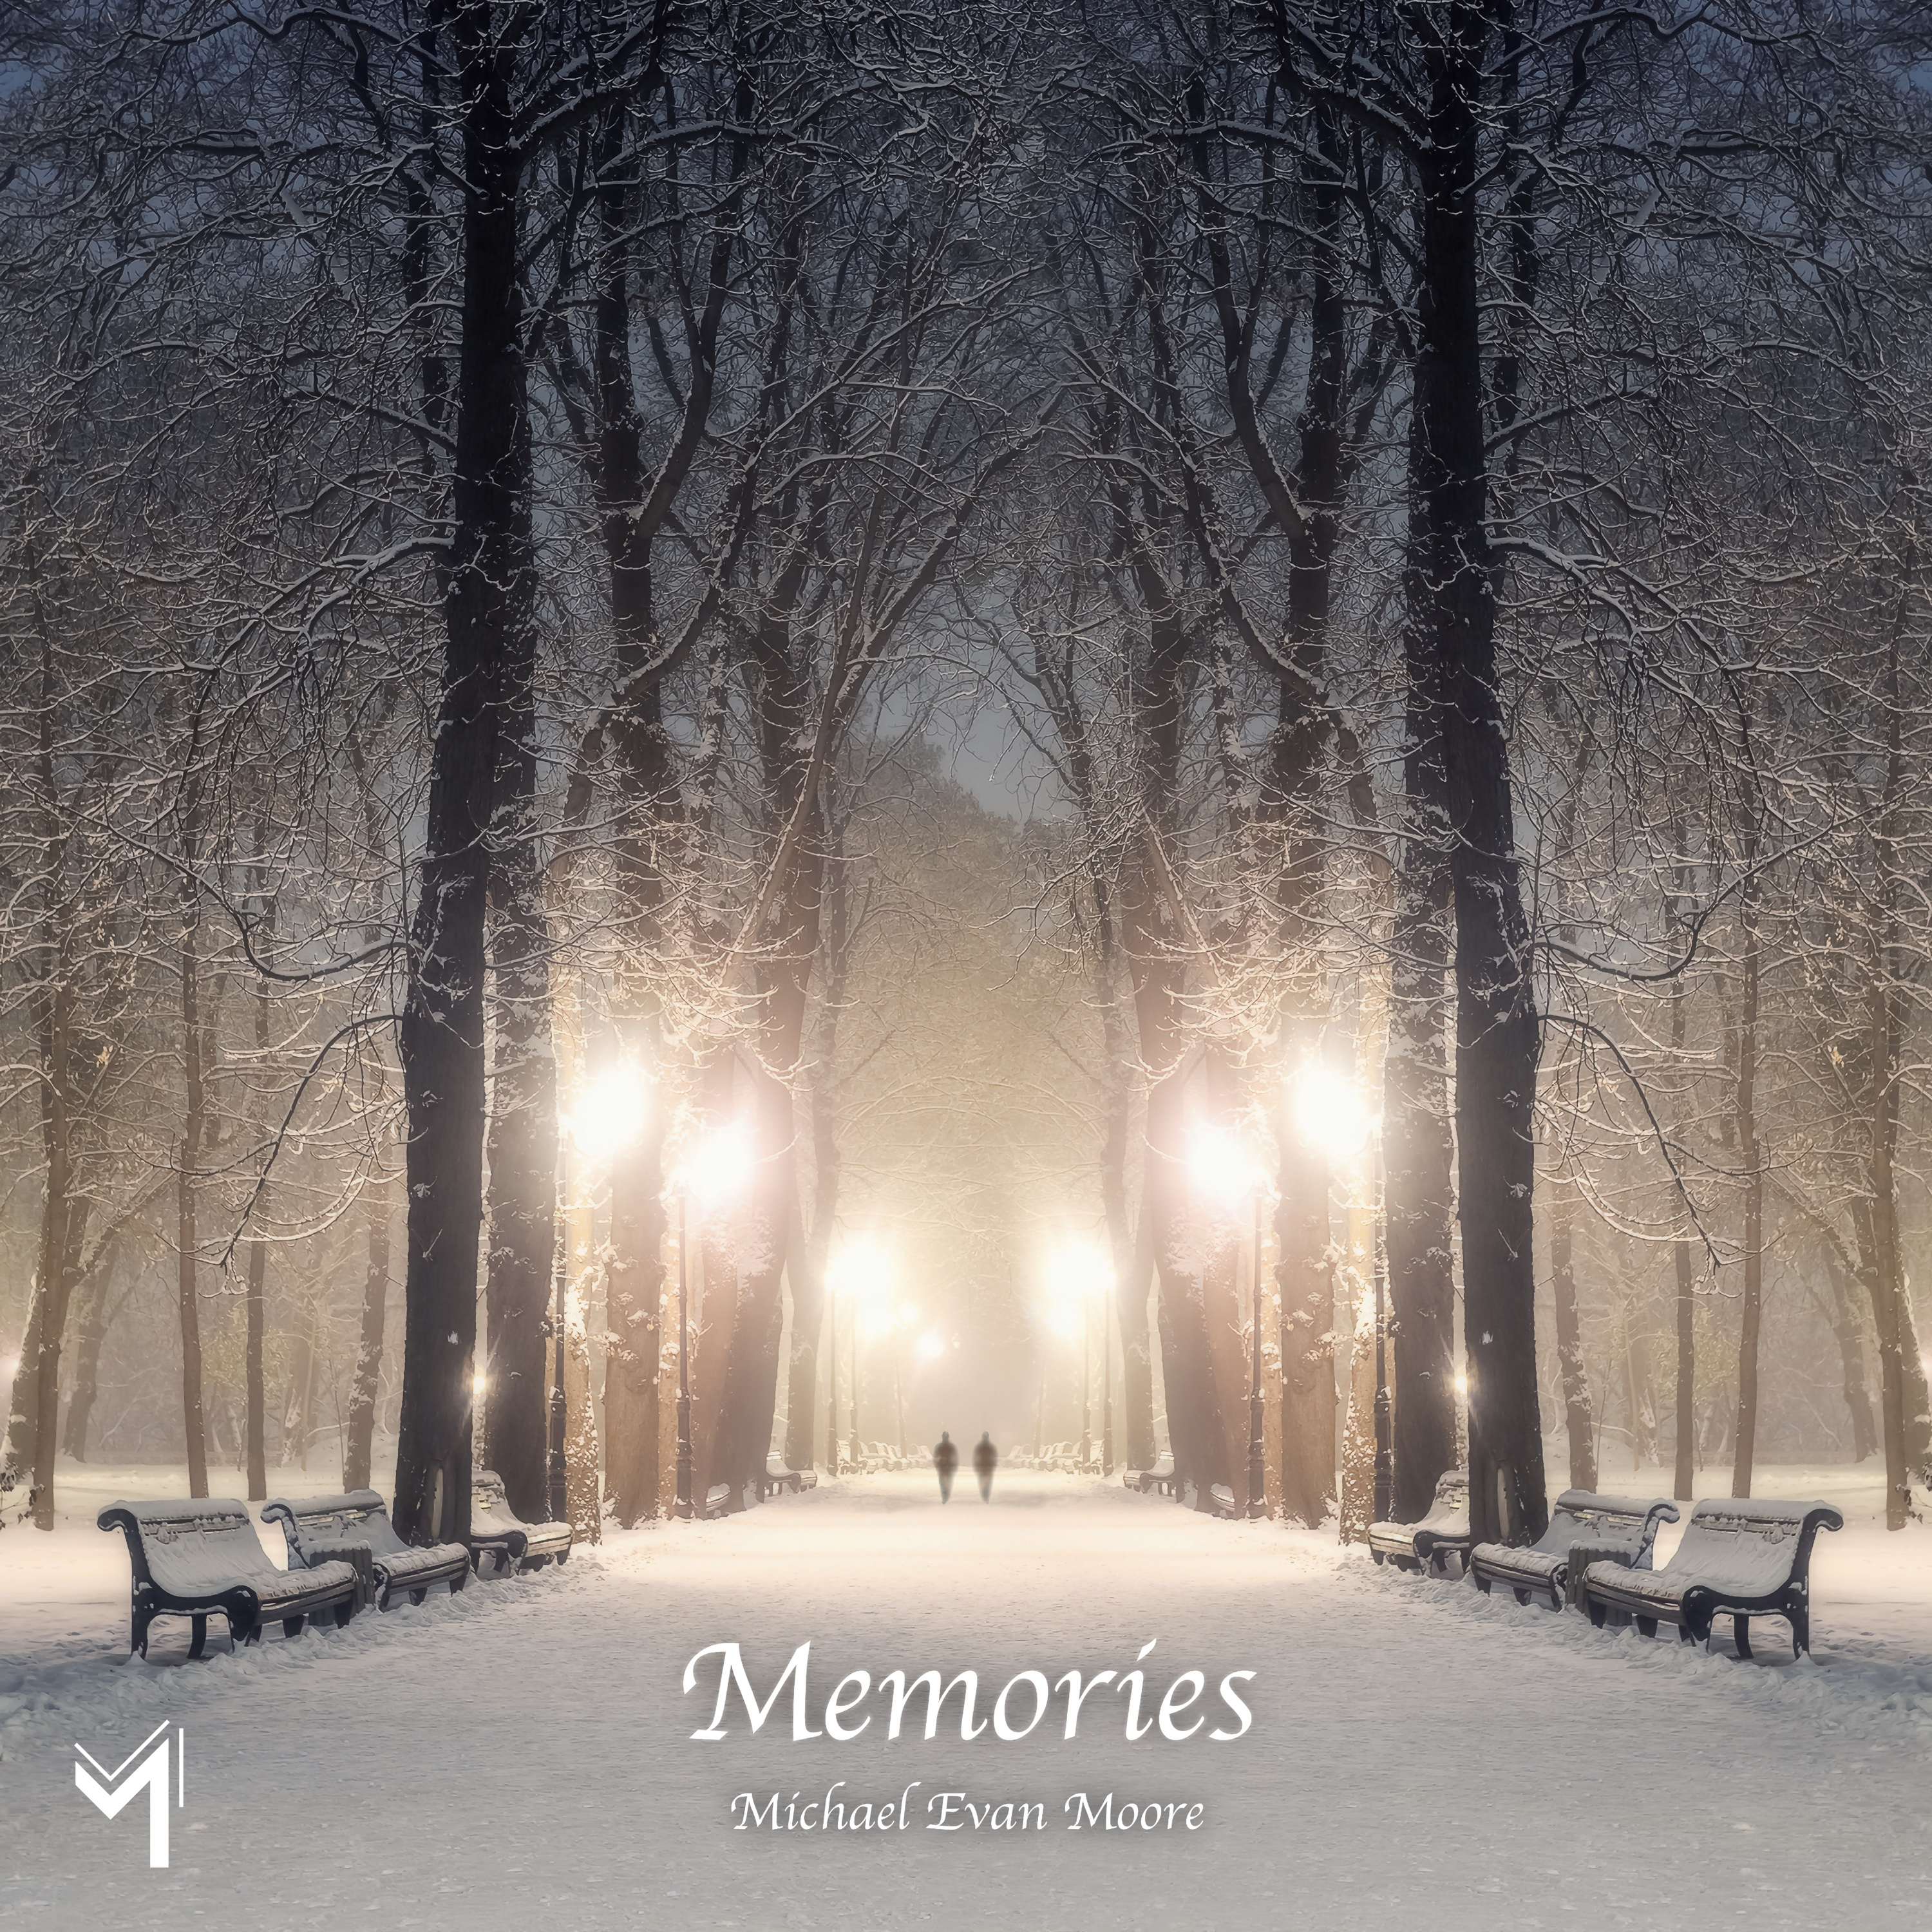 Memories Album Art with M Logo by Michael Evan Moore